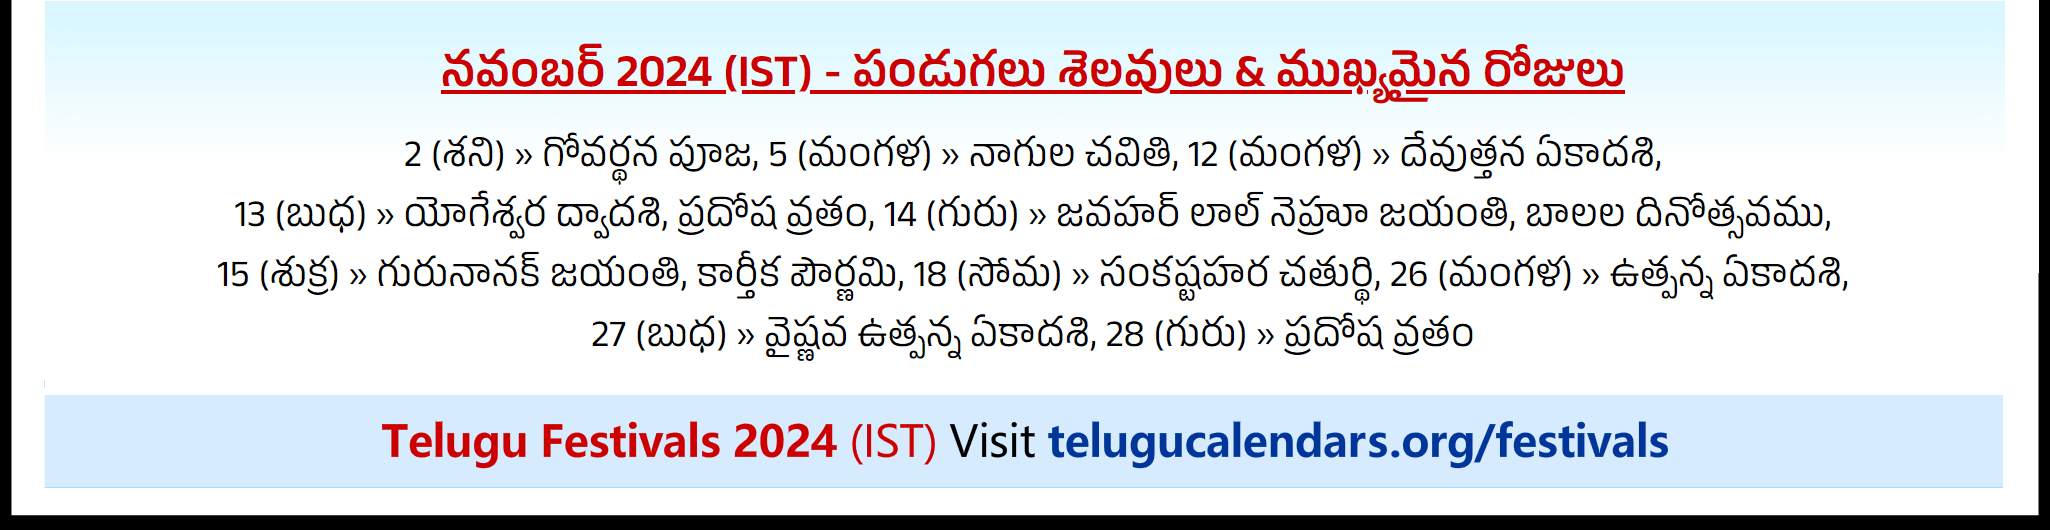 Telugu Festivals 2024 November London